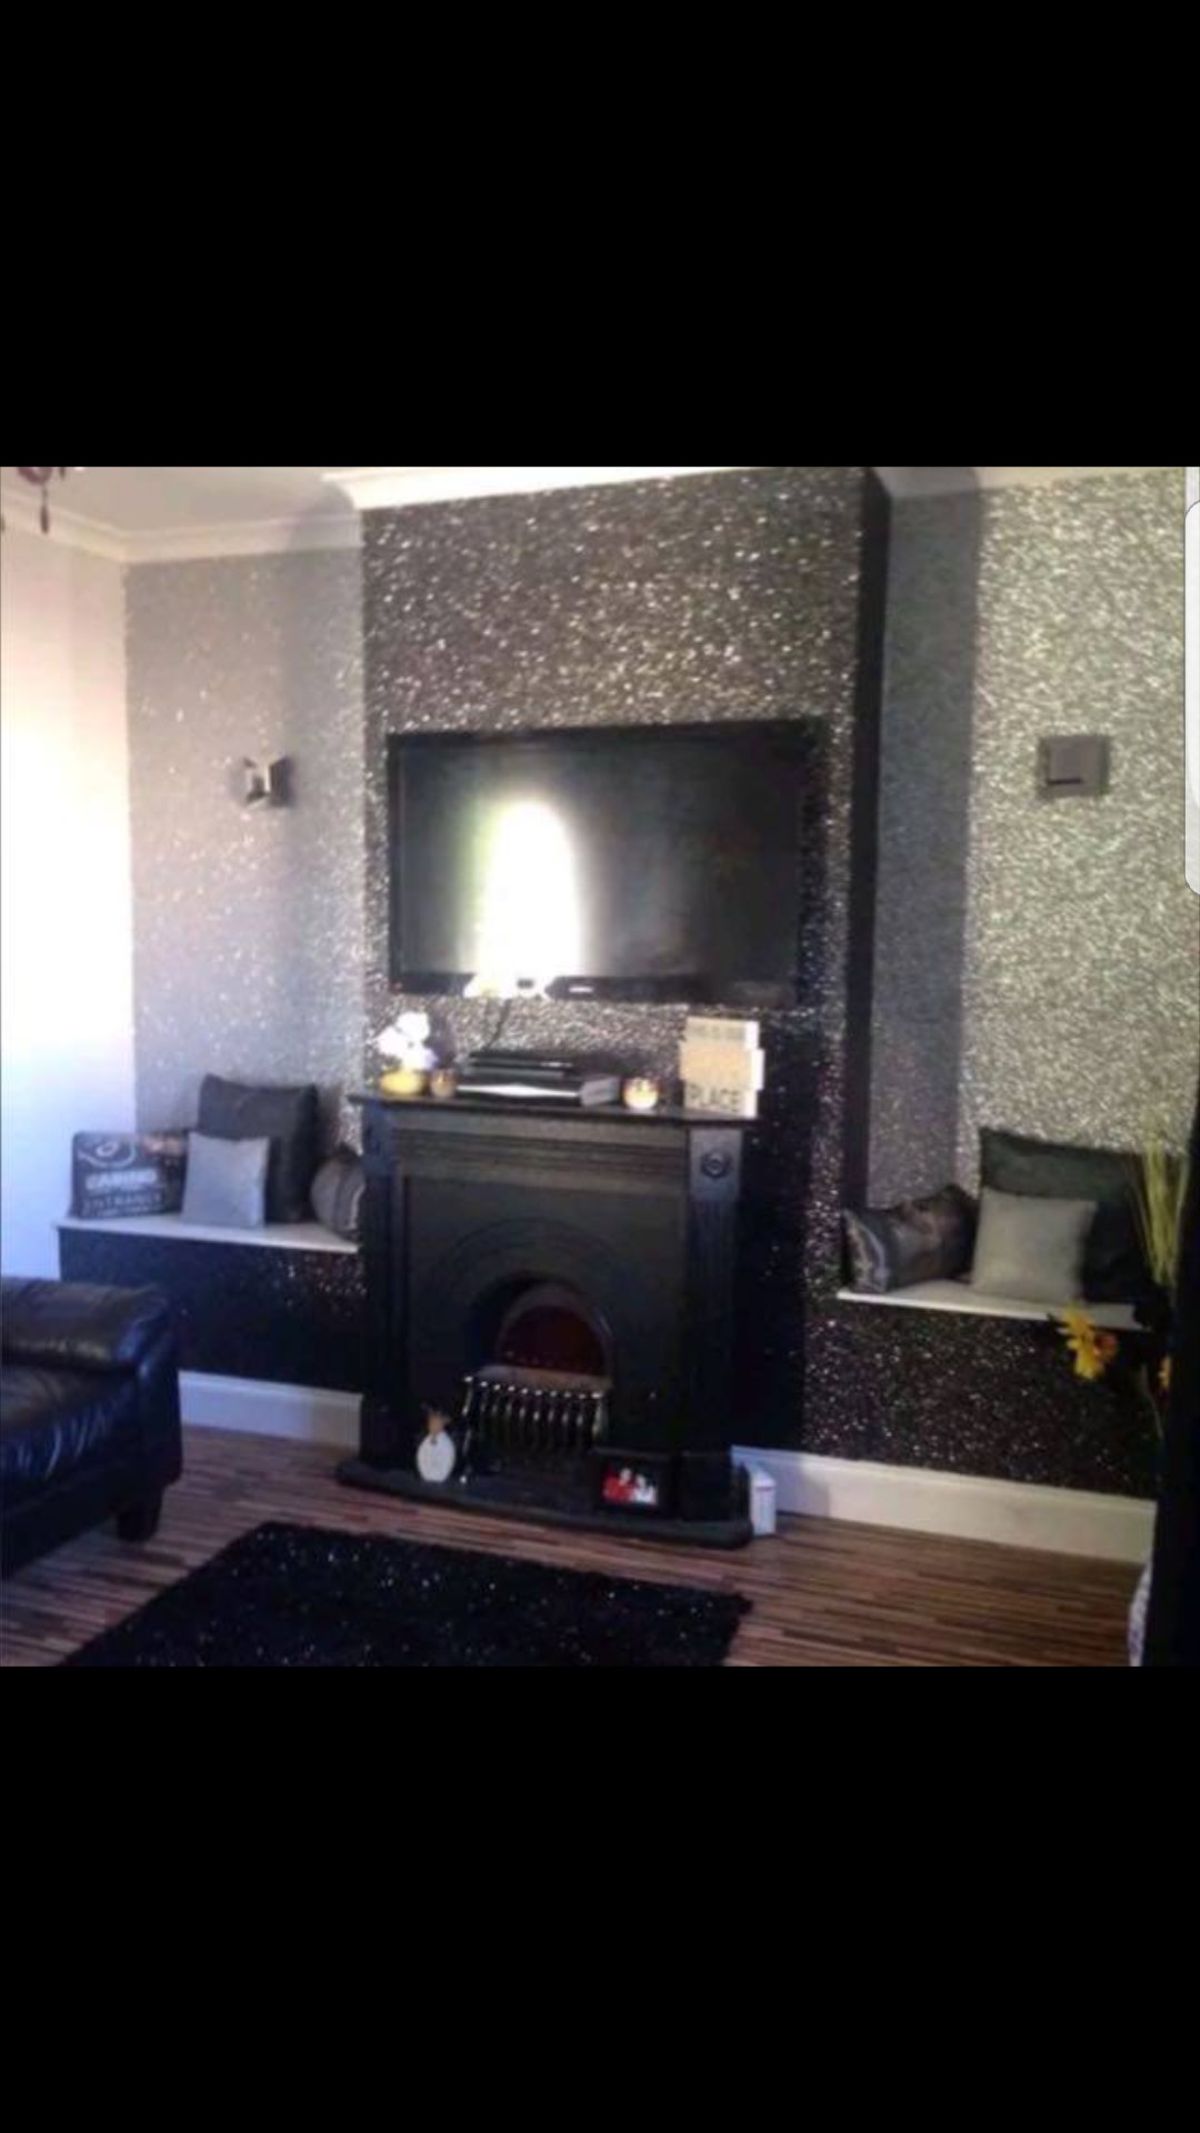 Silver Fabric Glitter Wallpaper
grade 3, So Sparkly - Living Room - HD Wallpaper 